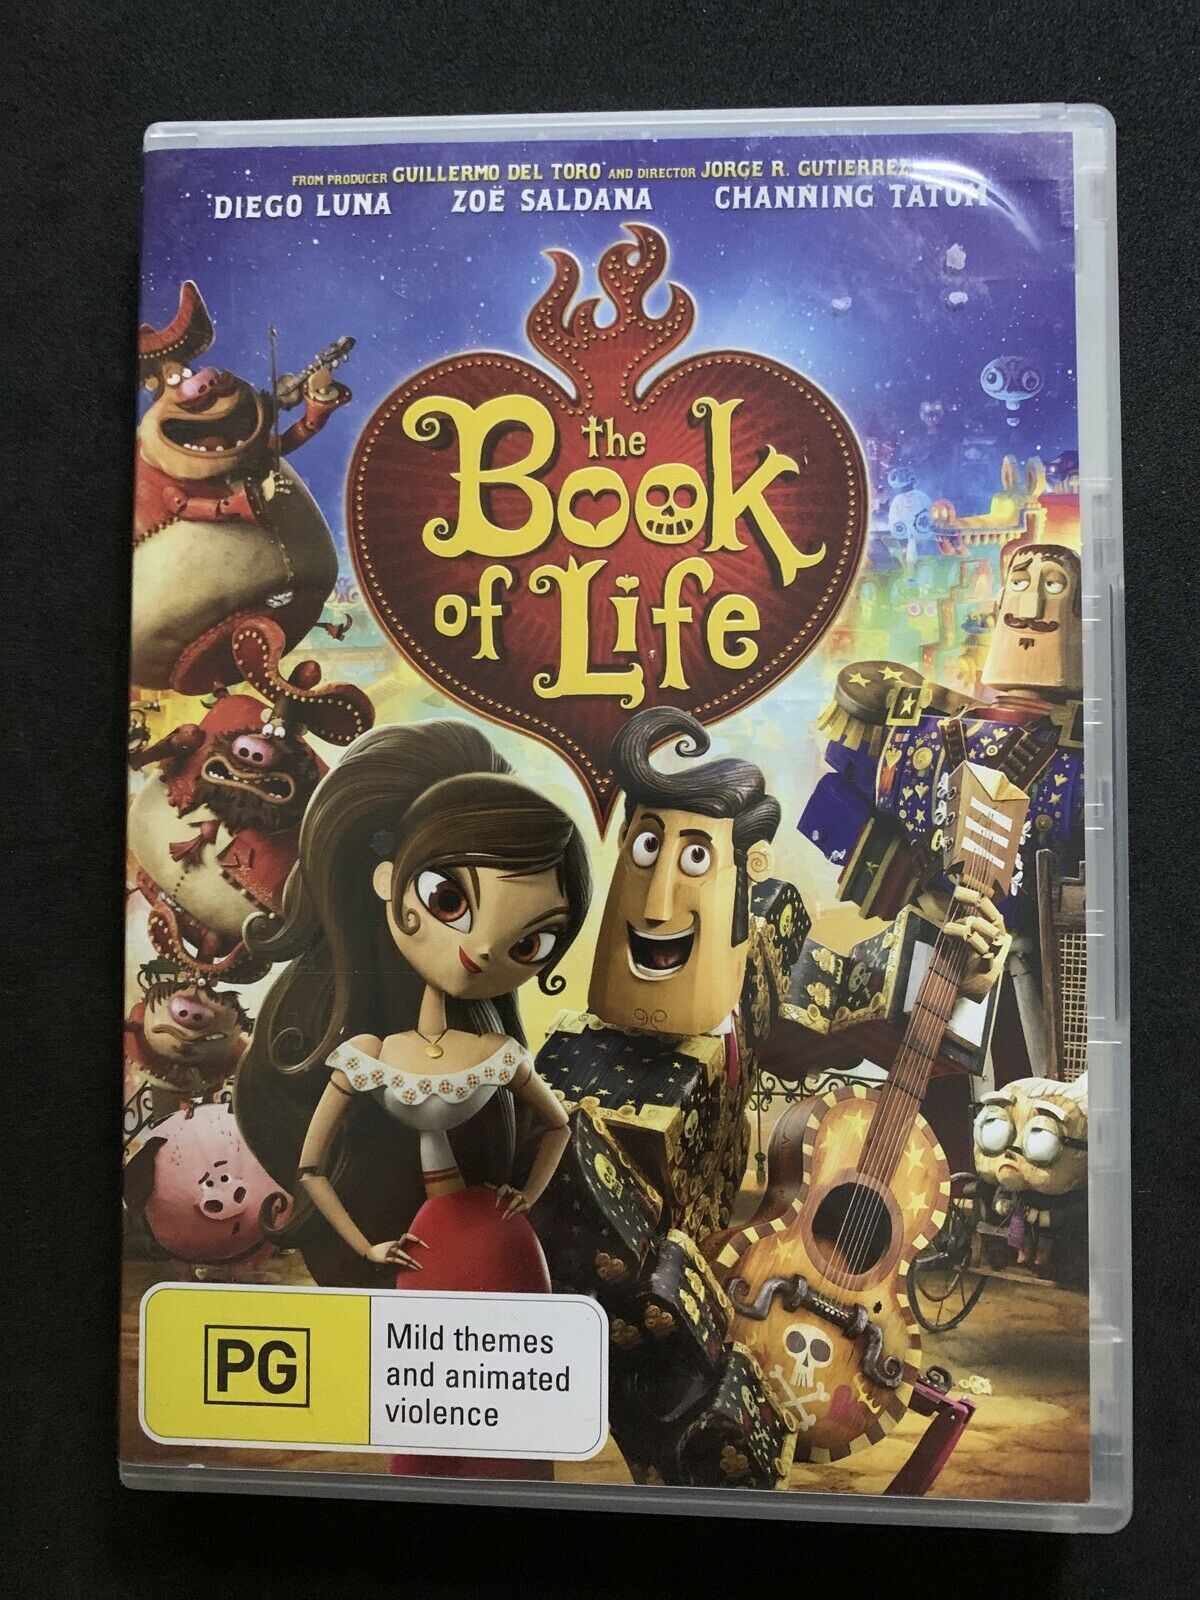 The Book Of Life (DVD, 2015) Diego Luna, Zoe Saldana. Region 4